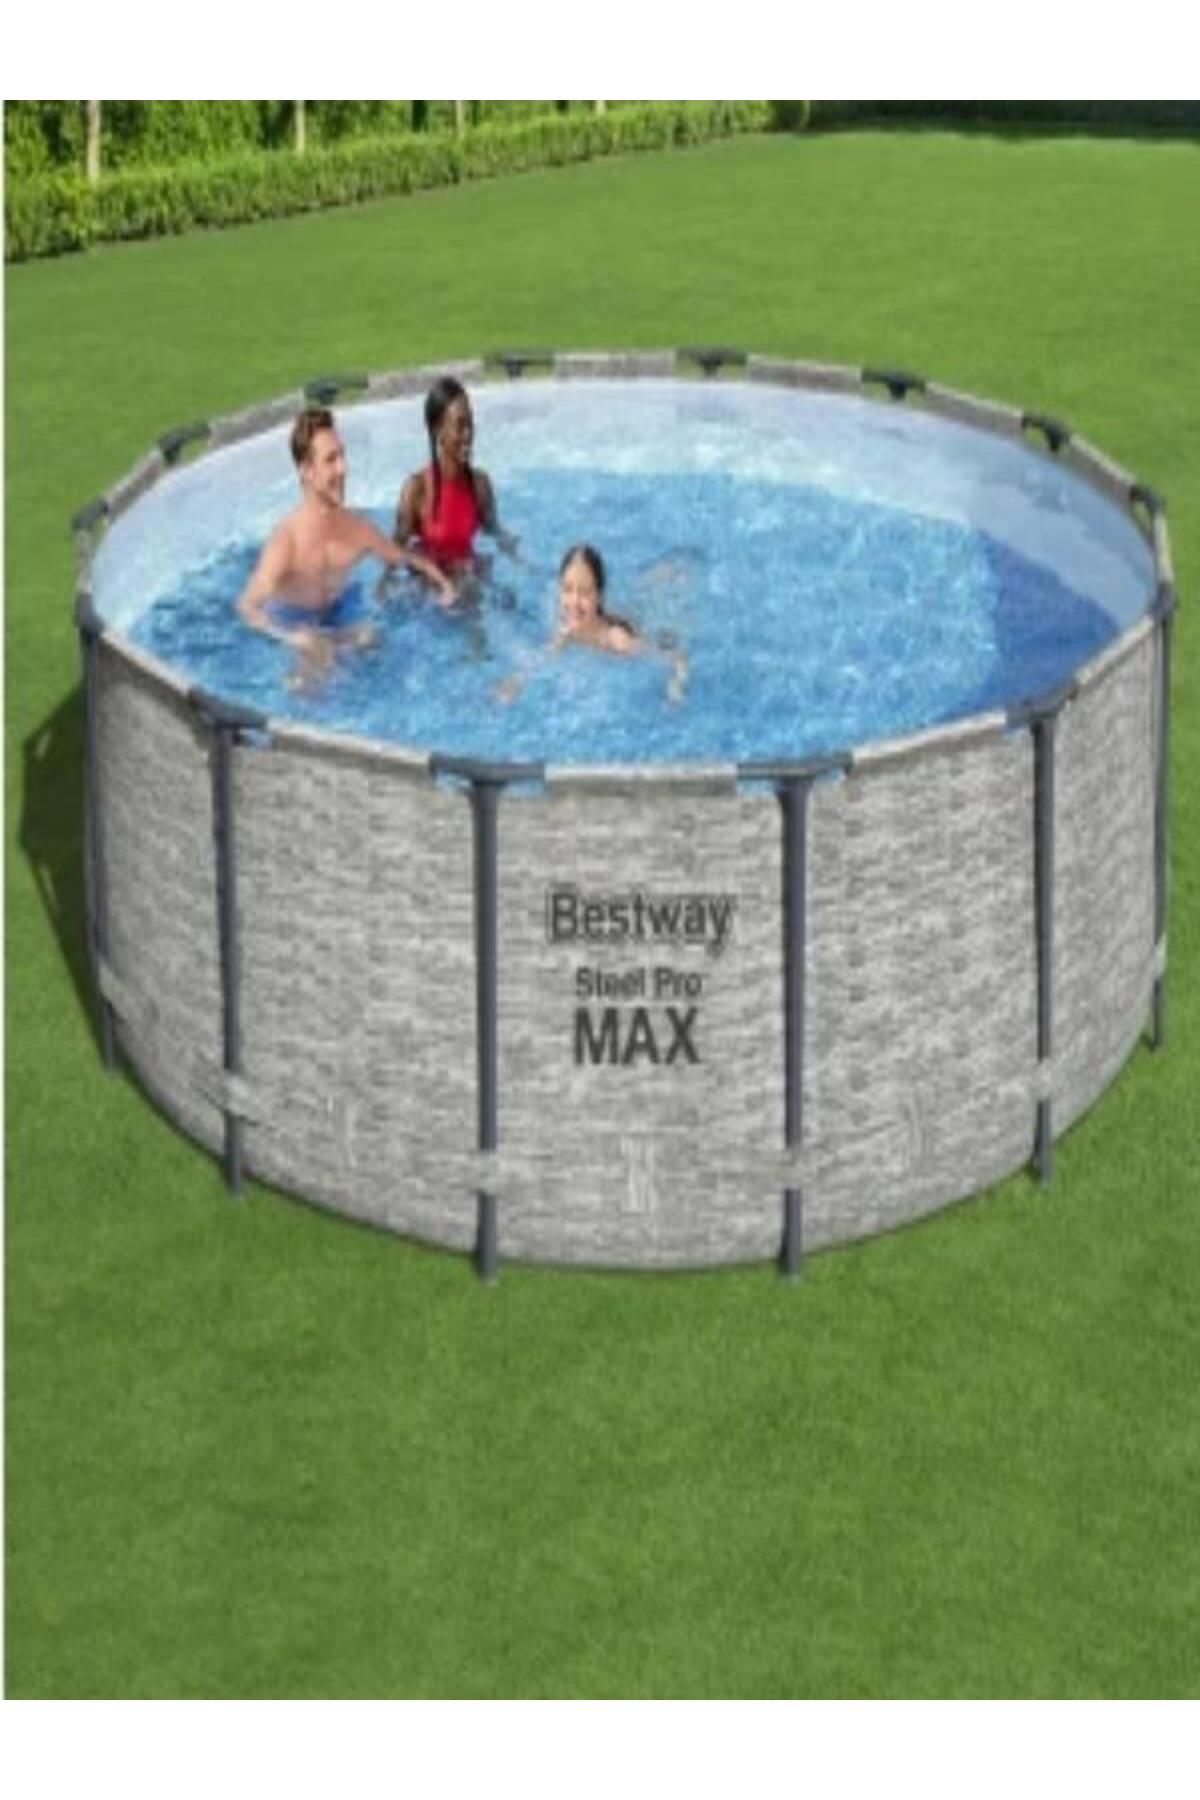 Bestway Pro max Yüzme Havuzu Prefabrik Aile Havuzu 735x132 Cm  Temizleme Filtreli